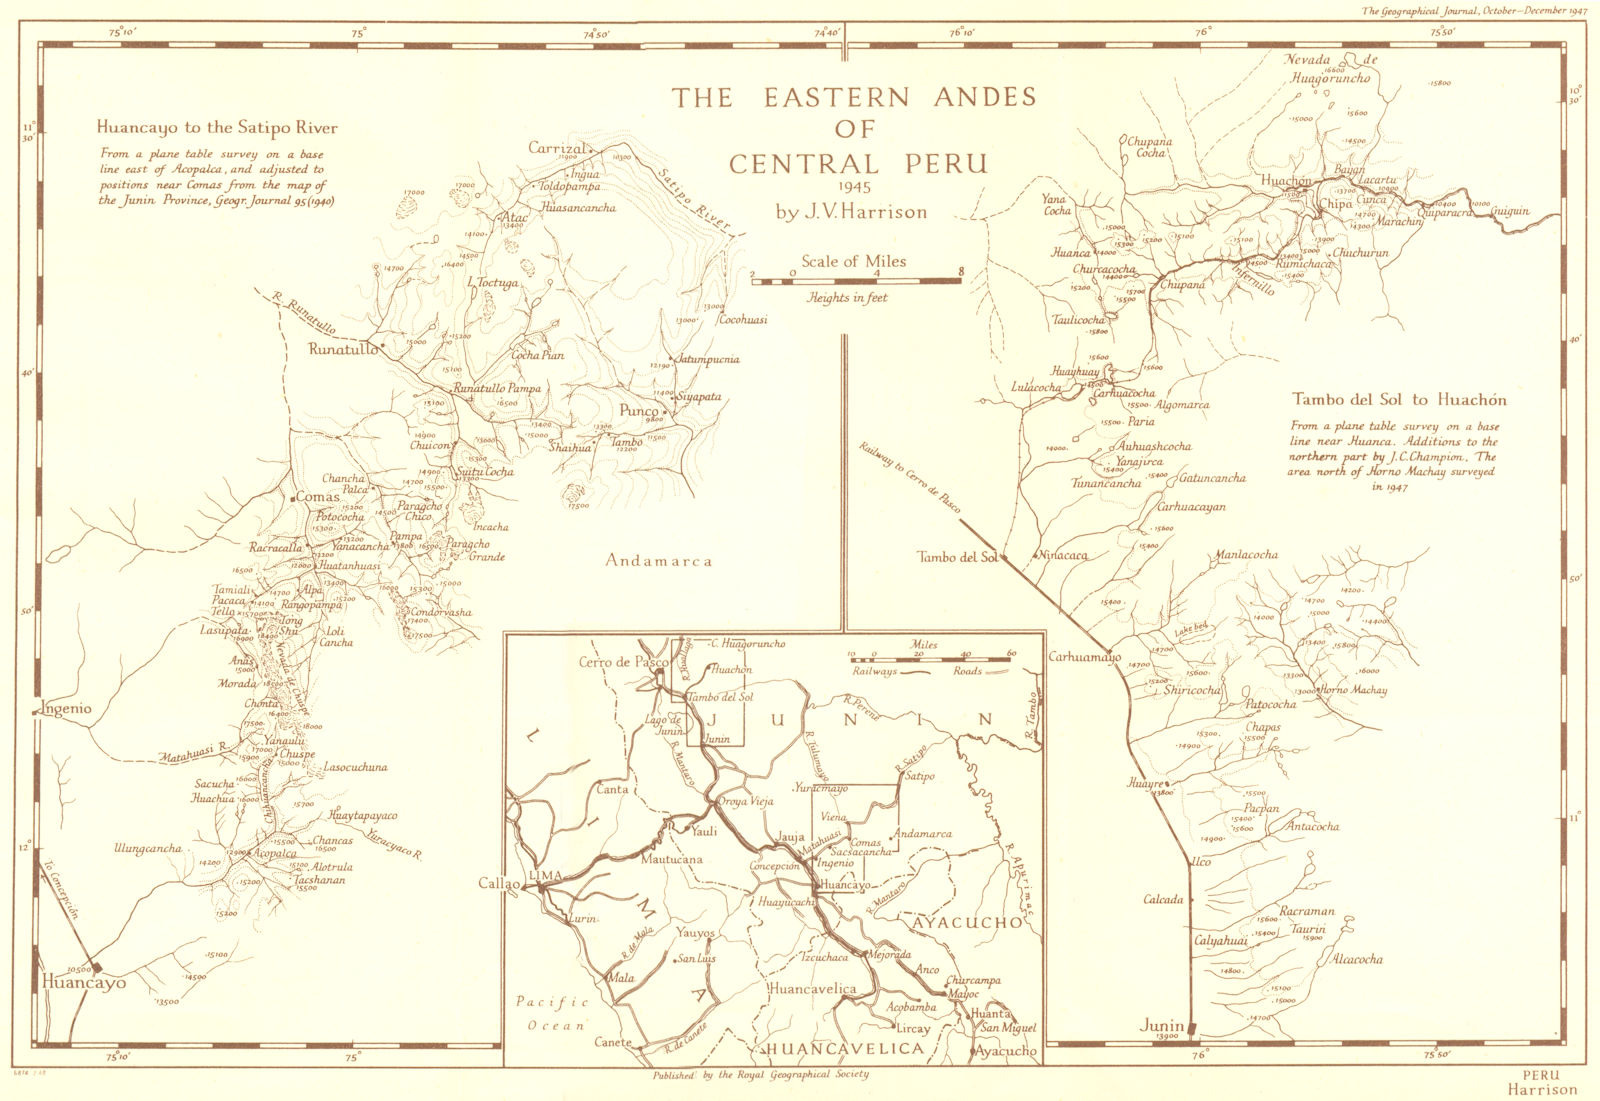 Associate Product PERU. East Andes of Central 1945, V Harrison 1947 old vintage map plan chart